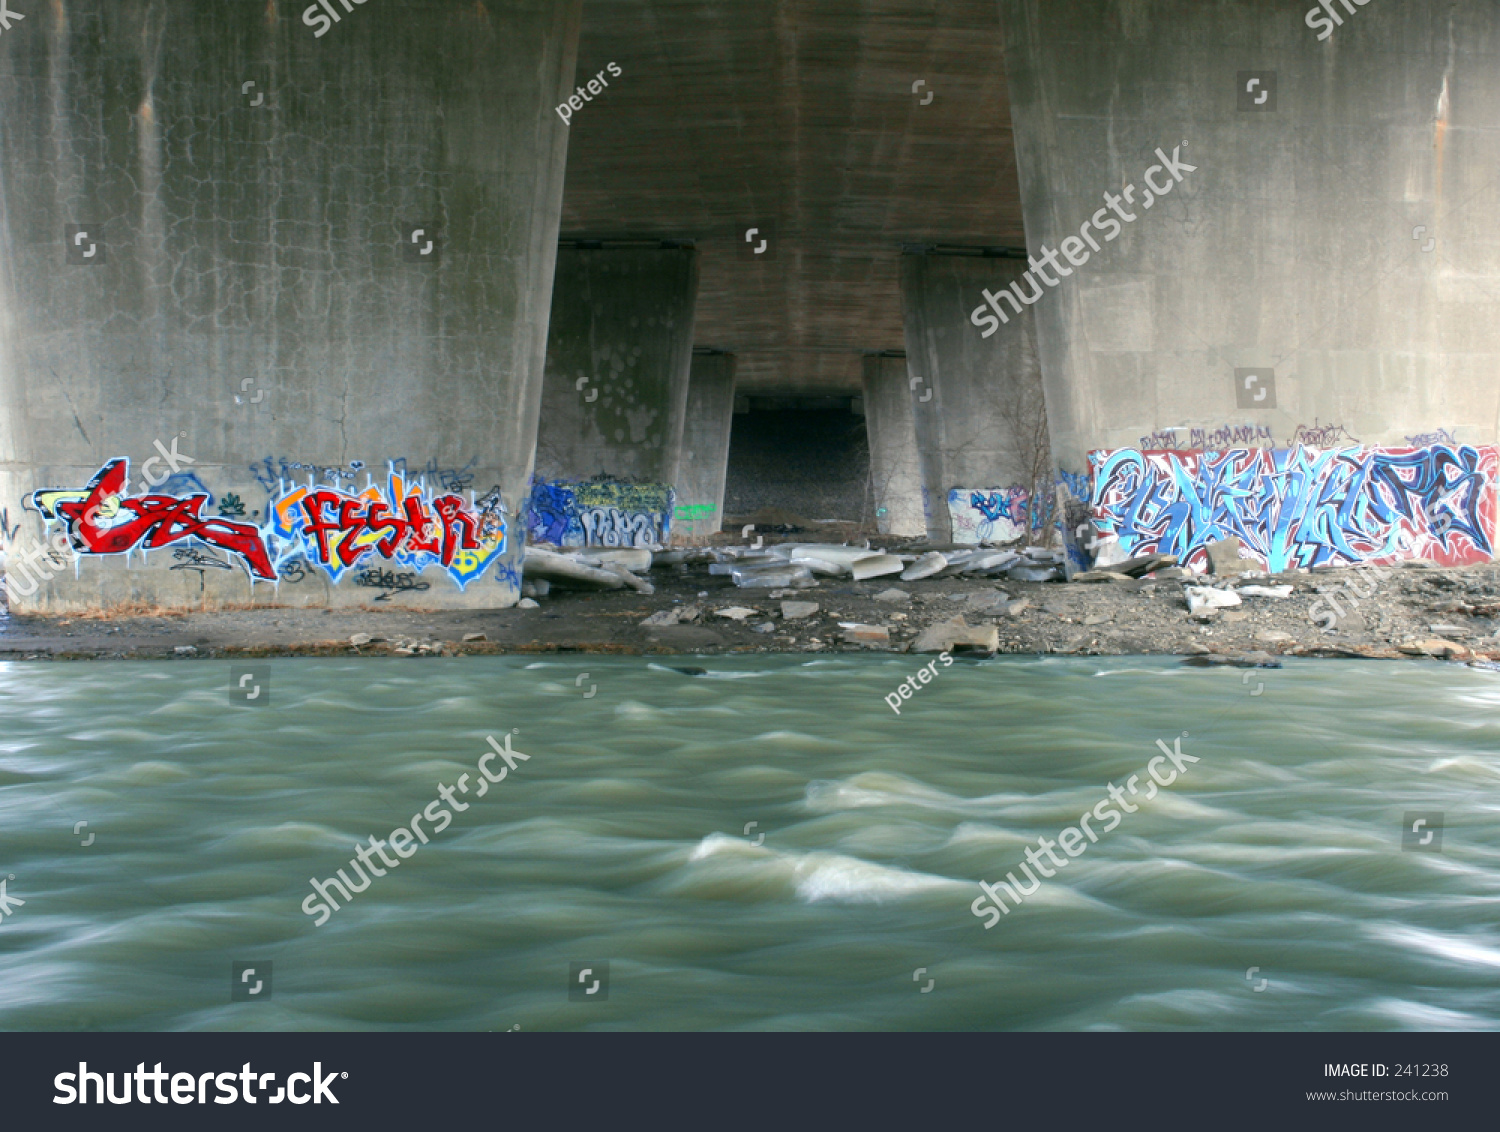 Graffiti Under Bridge The Arts Stock Image 241238